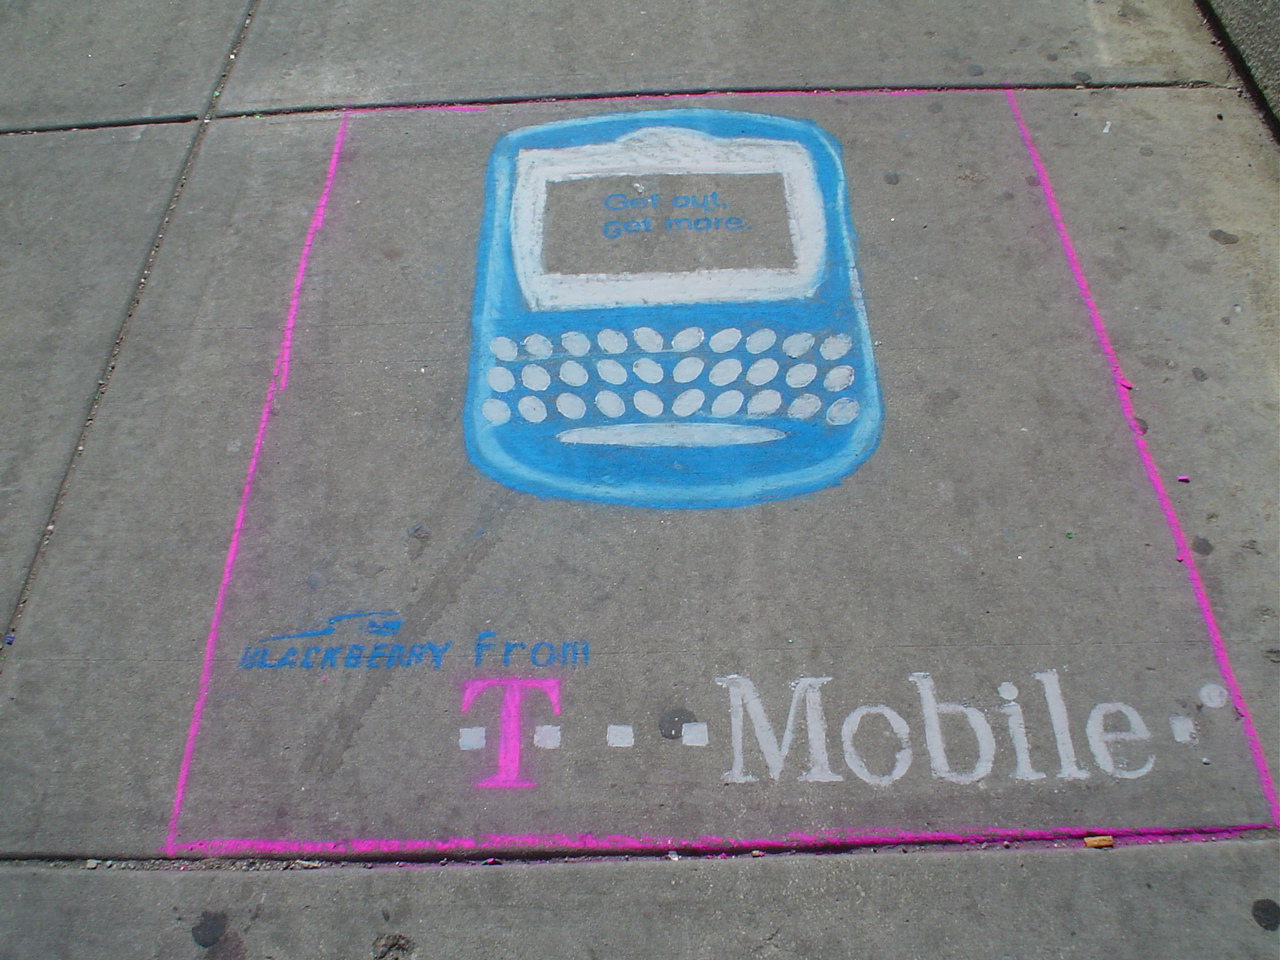 cell phone advertising ideas - chalk art